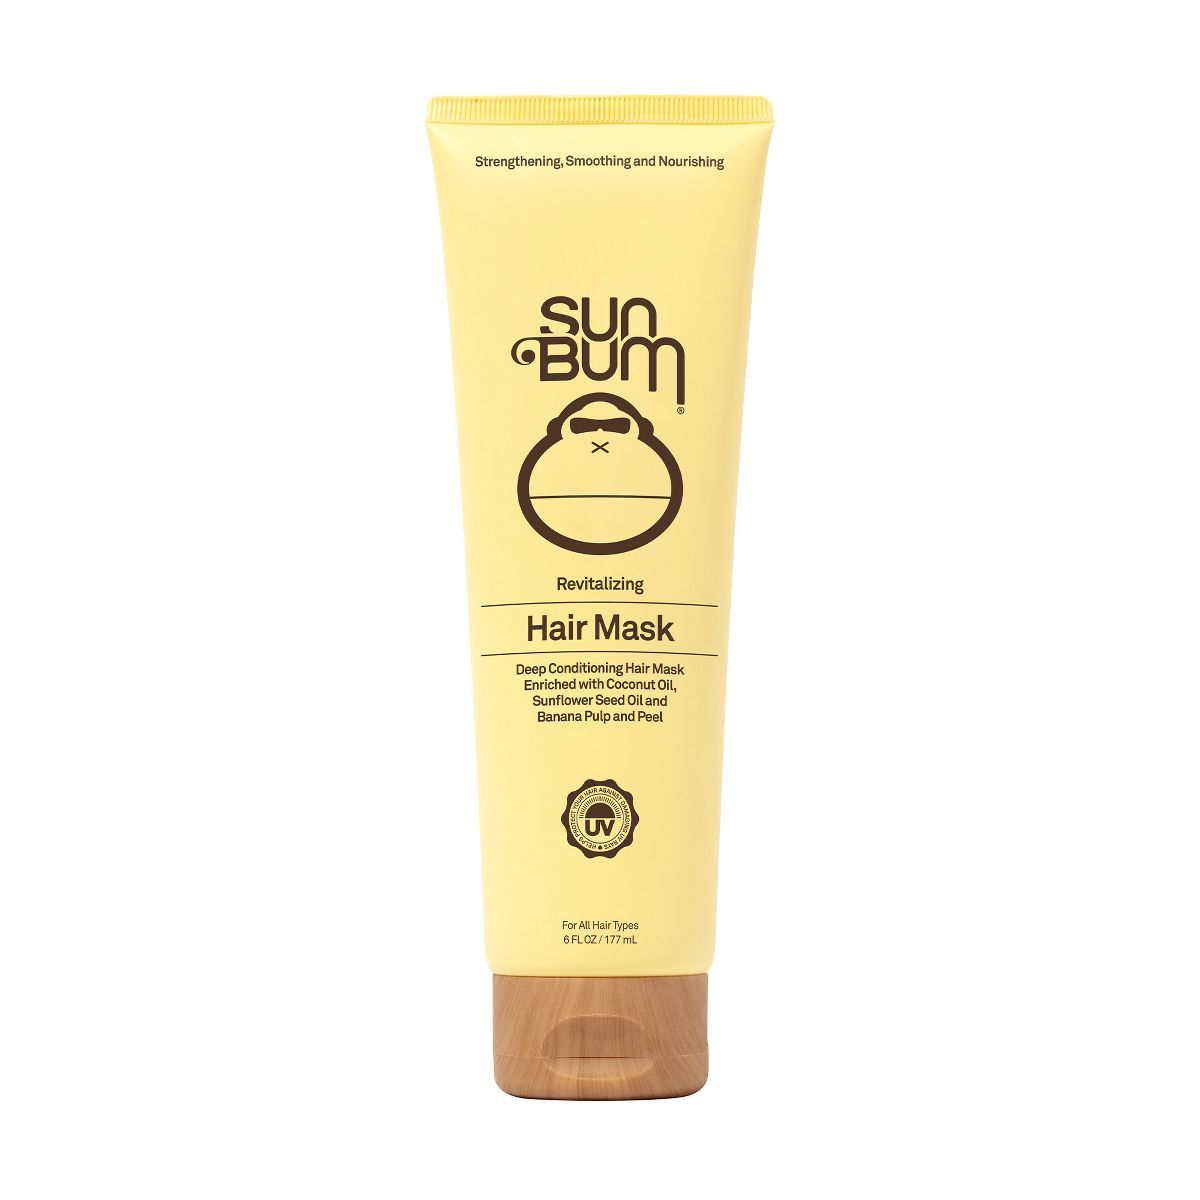 Sun Bum Hair Mask Tube - 6 fl oz | Target